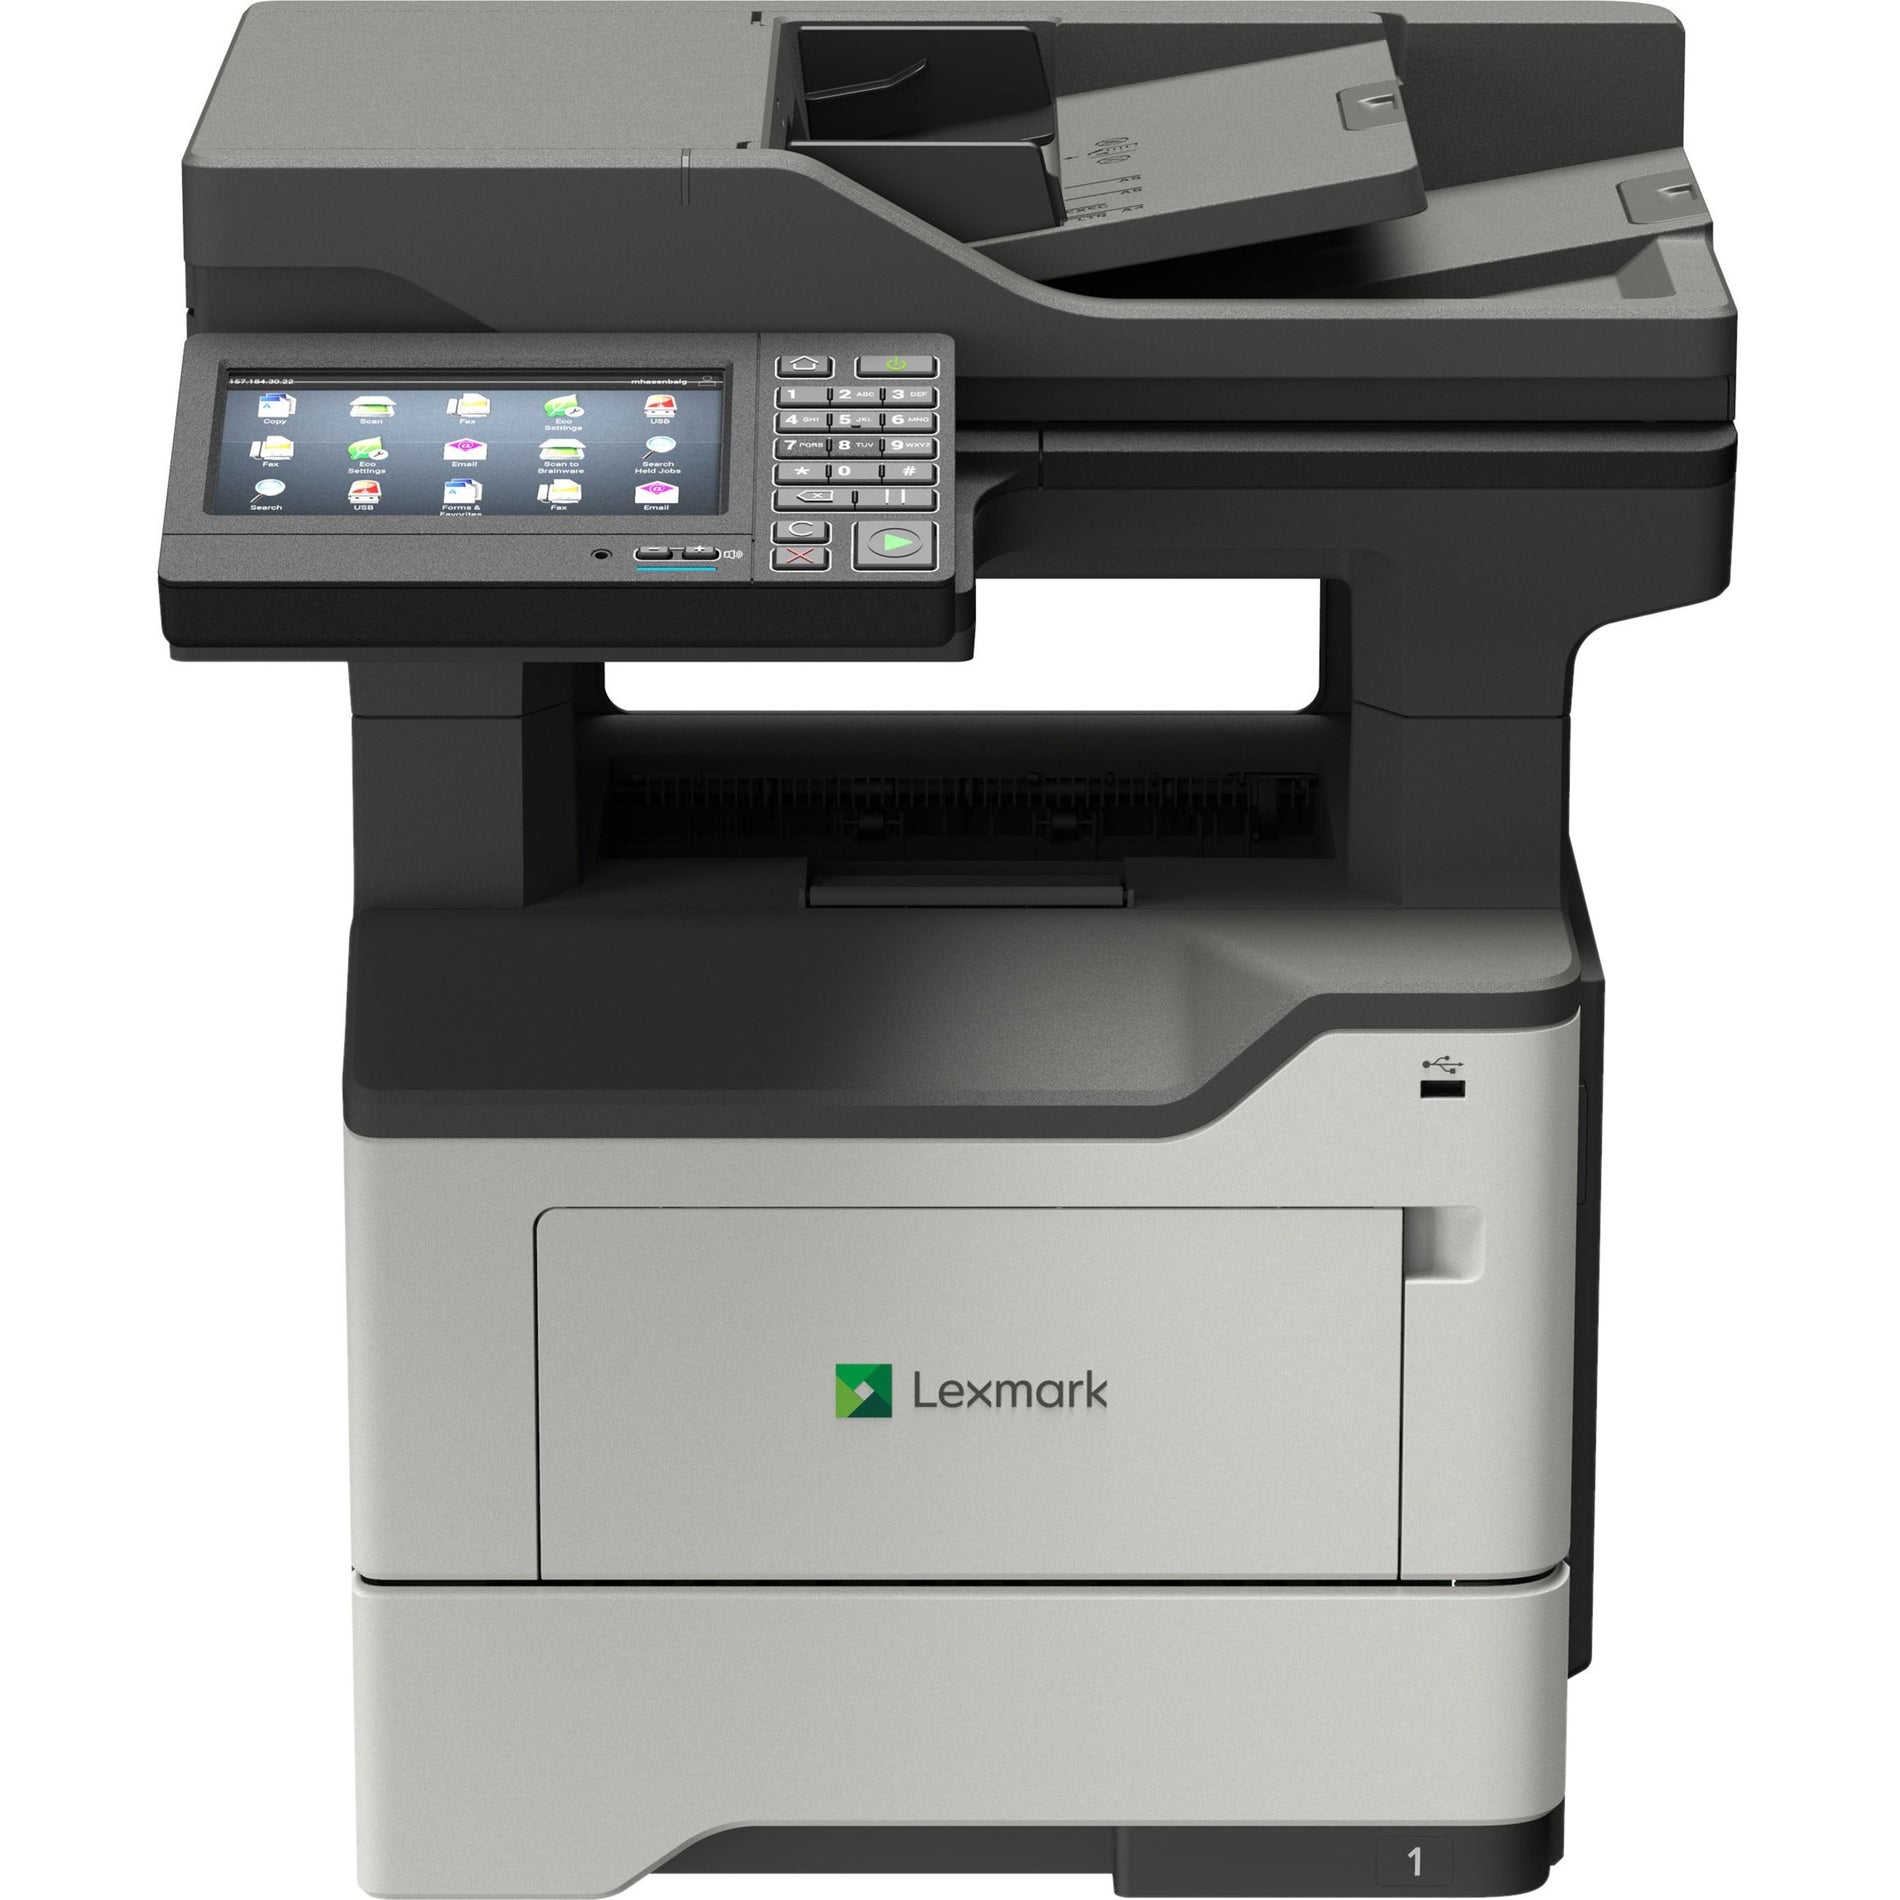 Lexmark 36ST908 MX622ade Multifunction Laser Printer, Monochrome, 2 GB Memory, Color Scanner, 47 / 50 sides per minute, 600 dpi Optical Resolution